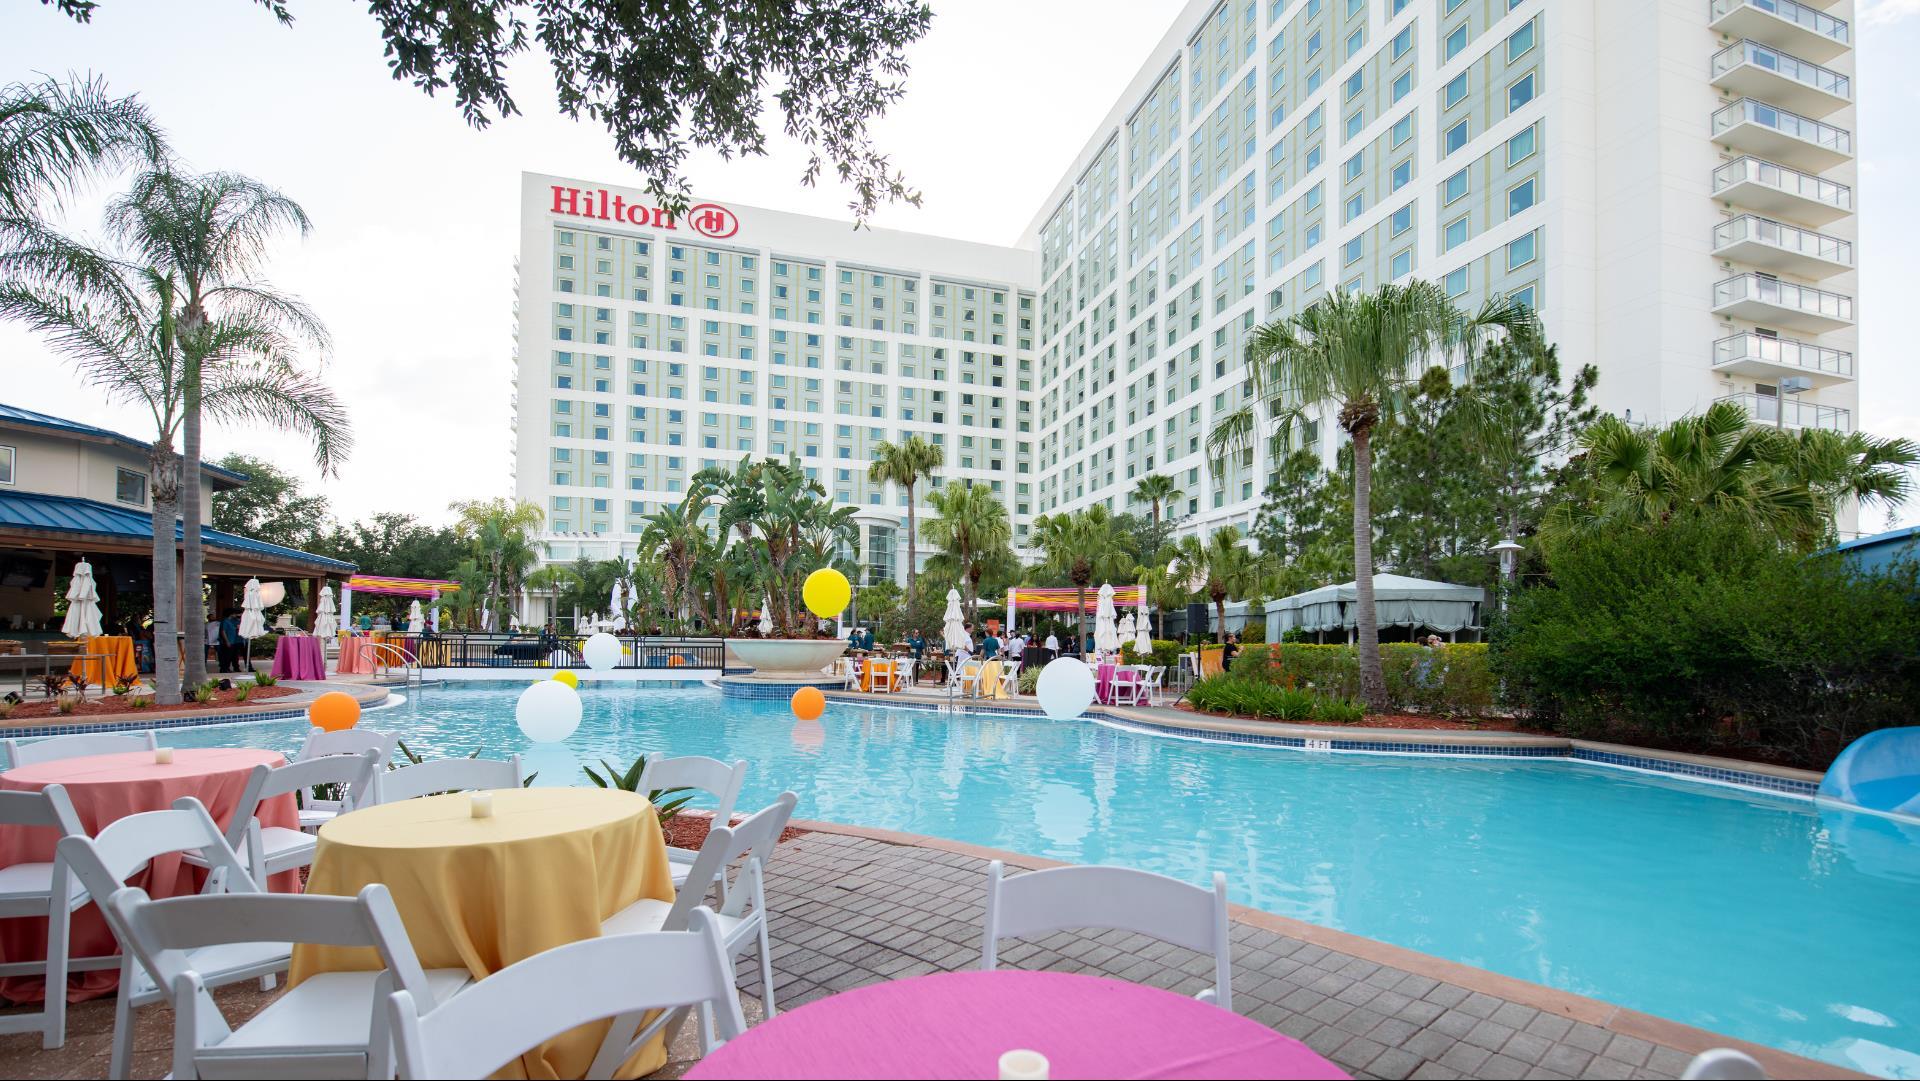 Hilton Orlando, a CVENT Top Meeting Hotel in North America in Orlando, FL